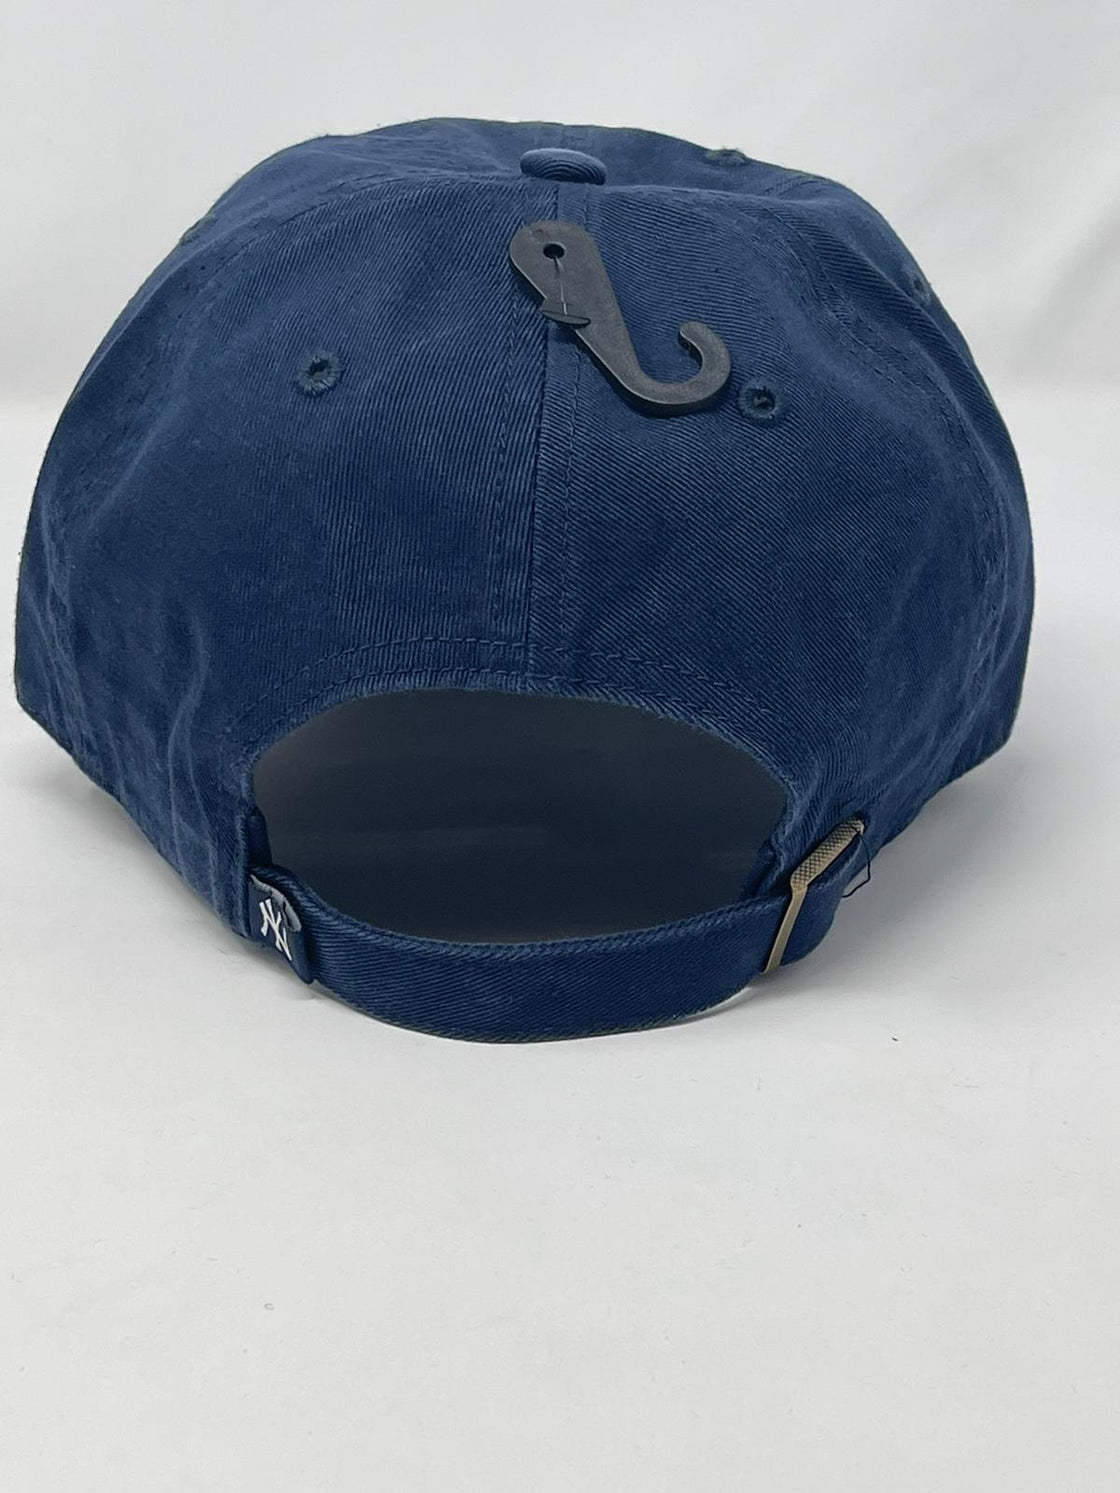 Men's '47 Navy New York Yankees Heritage Clean Up Adjustable Hat